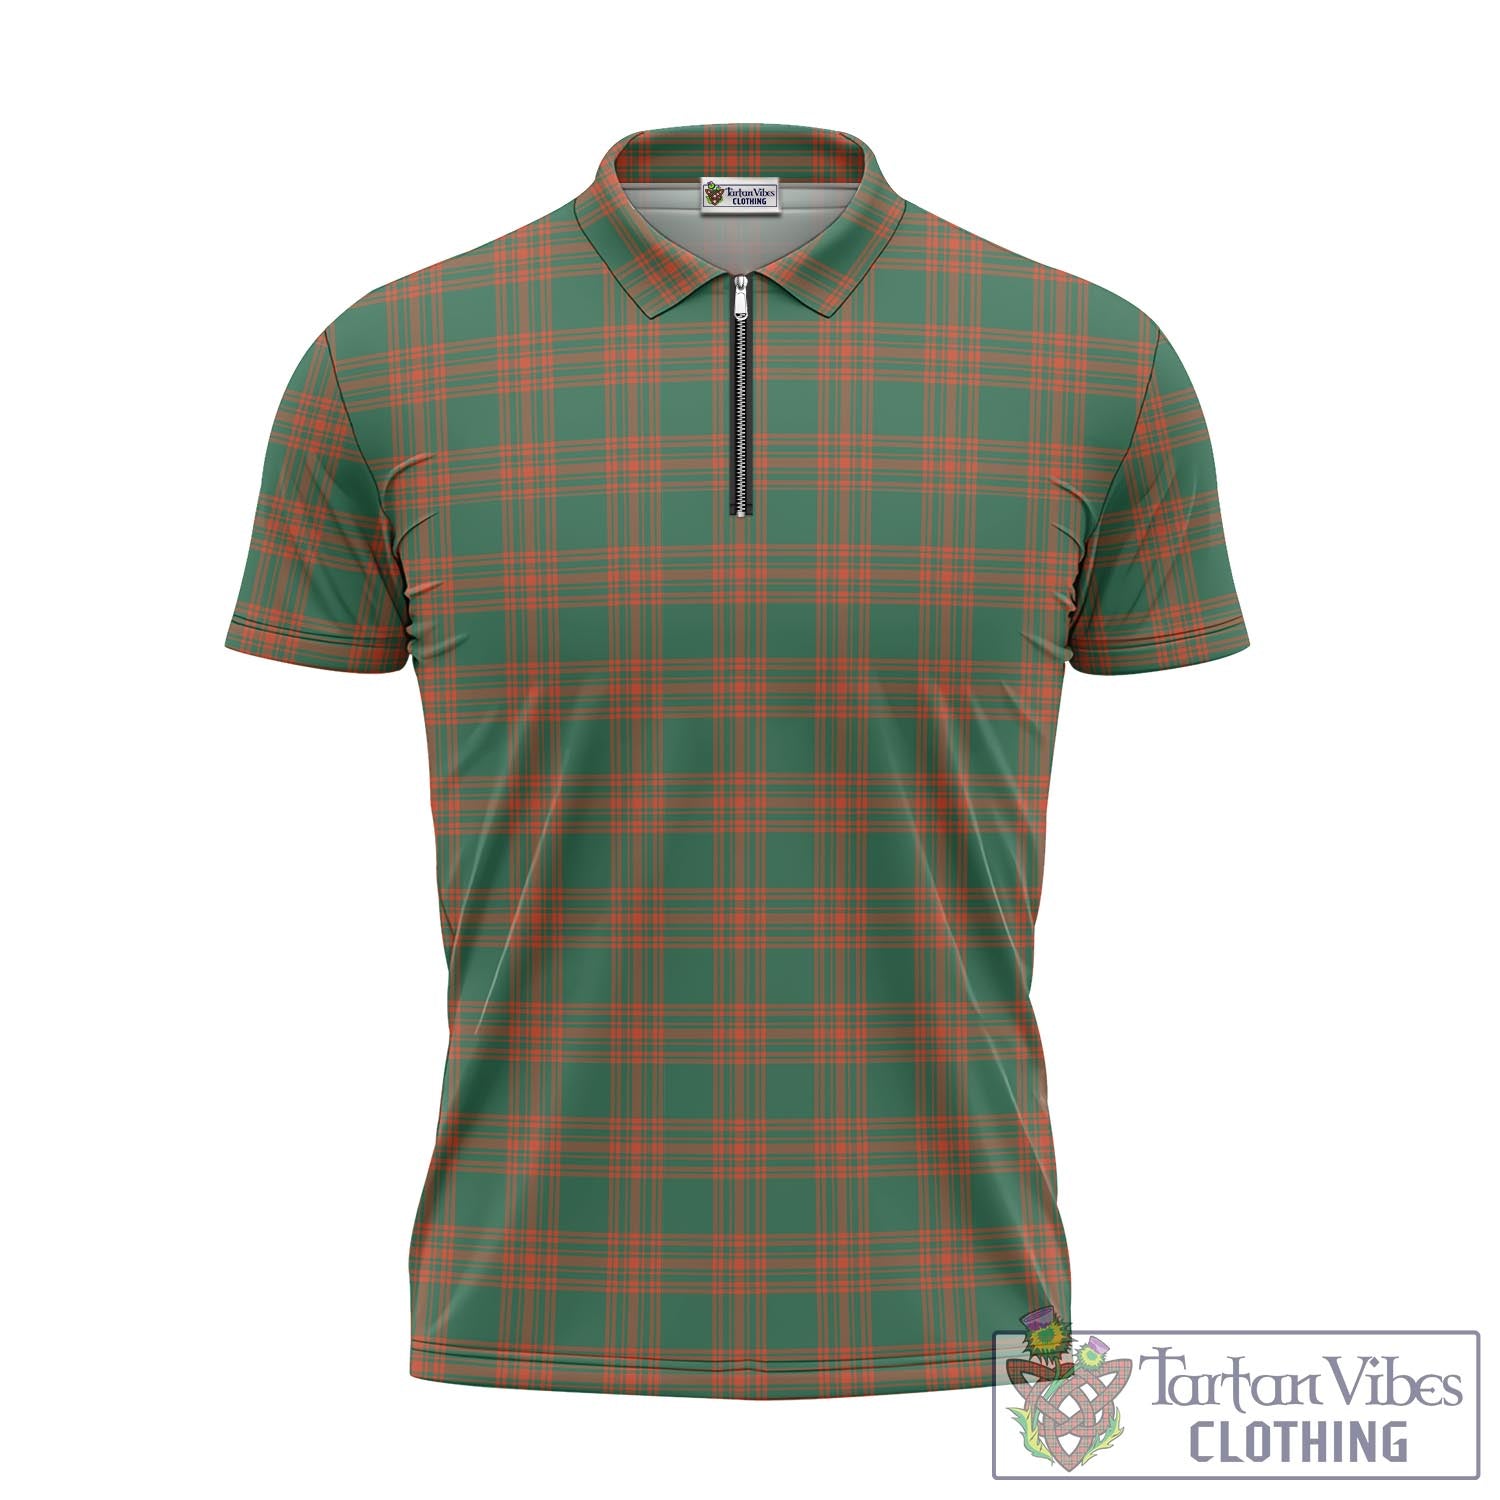 Tartan Vibes Clothing Menzies Green Ancient Tartan Zipper Polo Shirt